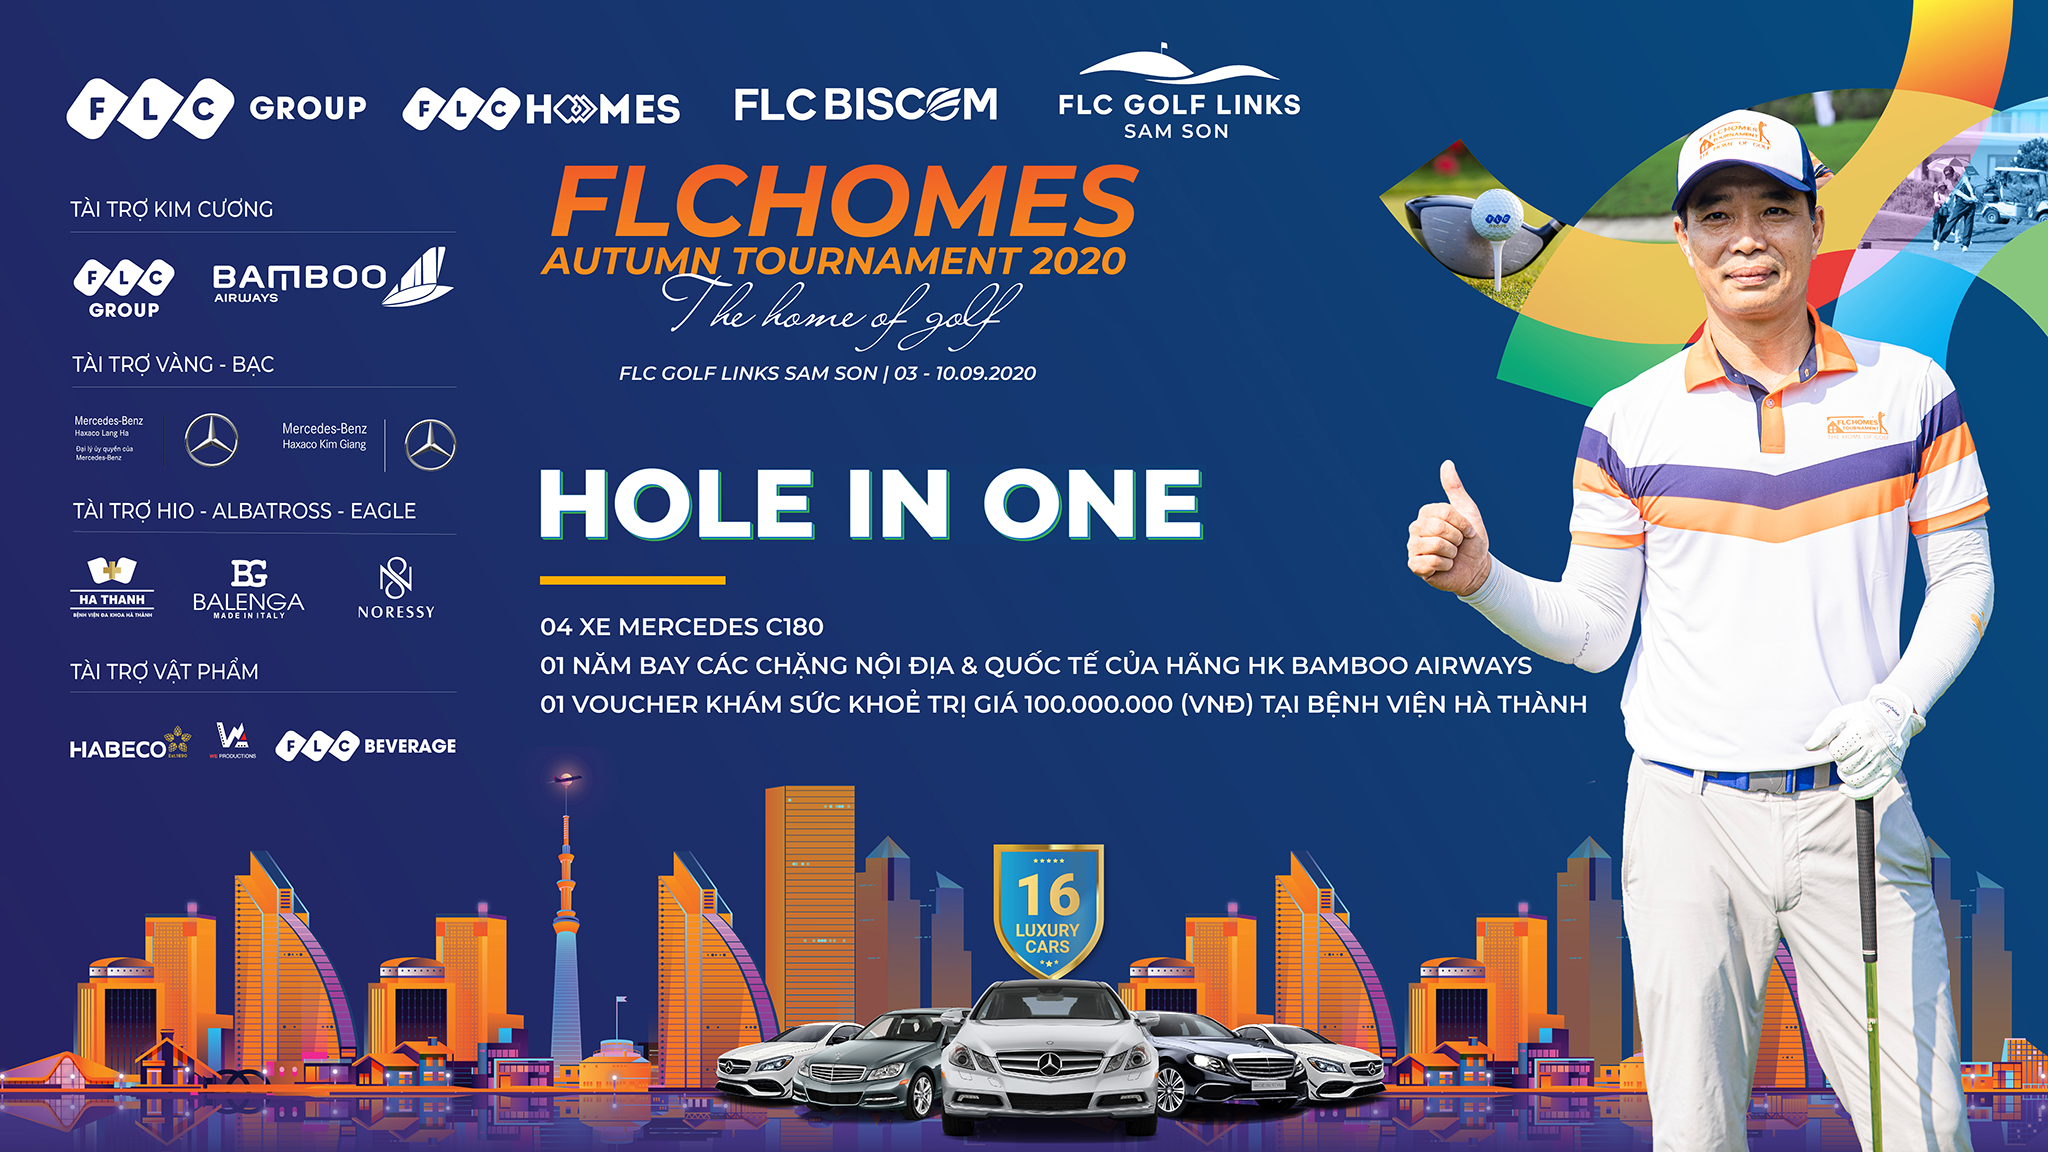 Tin nóng: Golfer Nguyễn Thanh Anh ghi Hole in One 10 tỷ đồng tại giải golf FLCHomes Autumn Tournament 2020